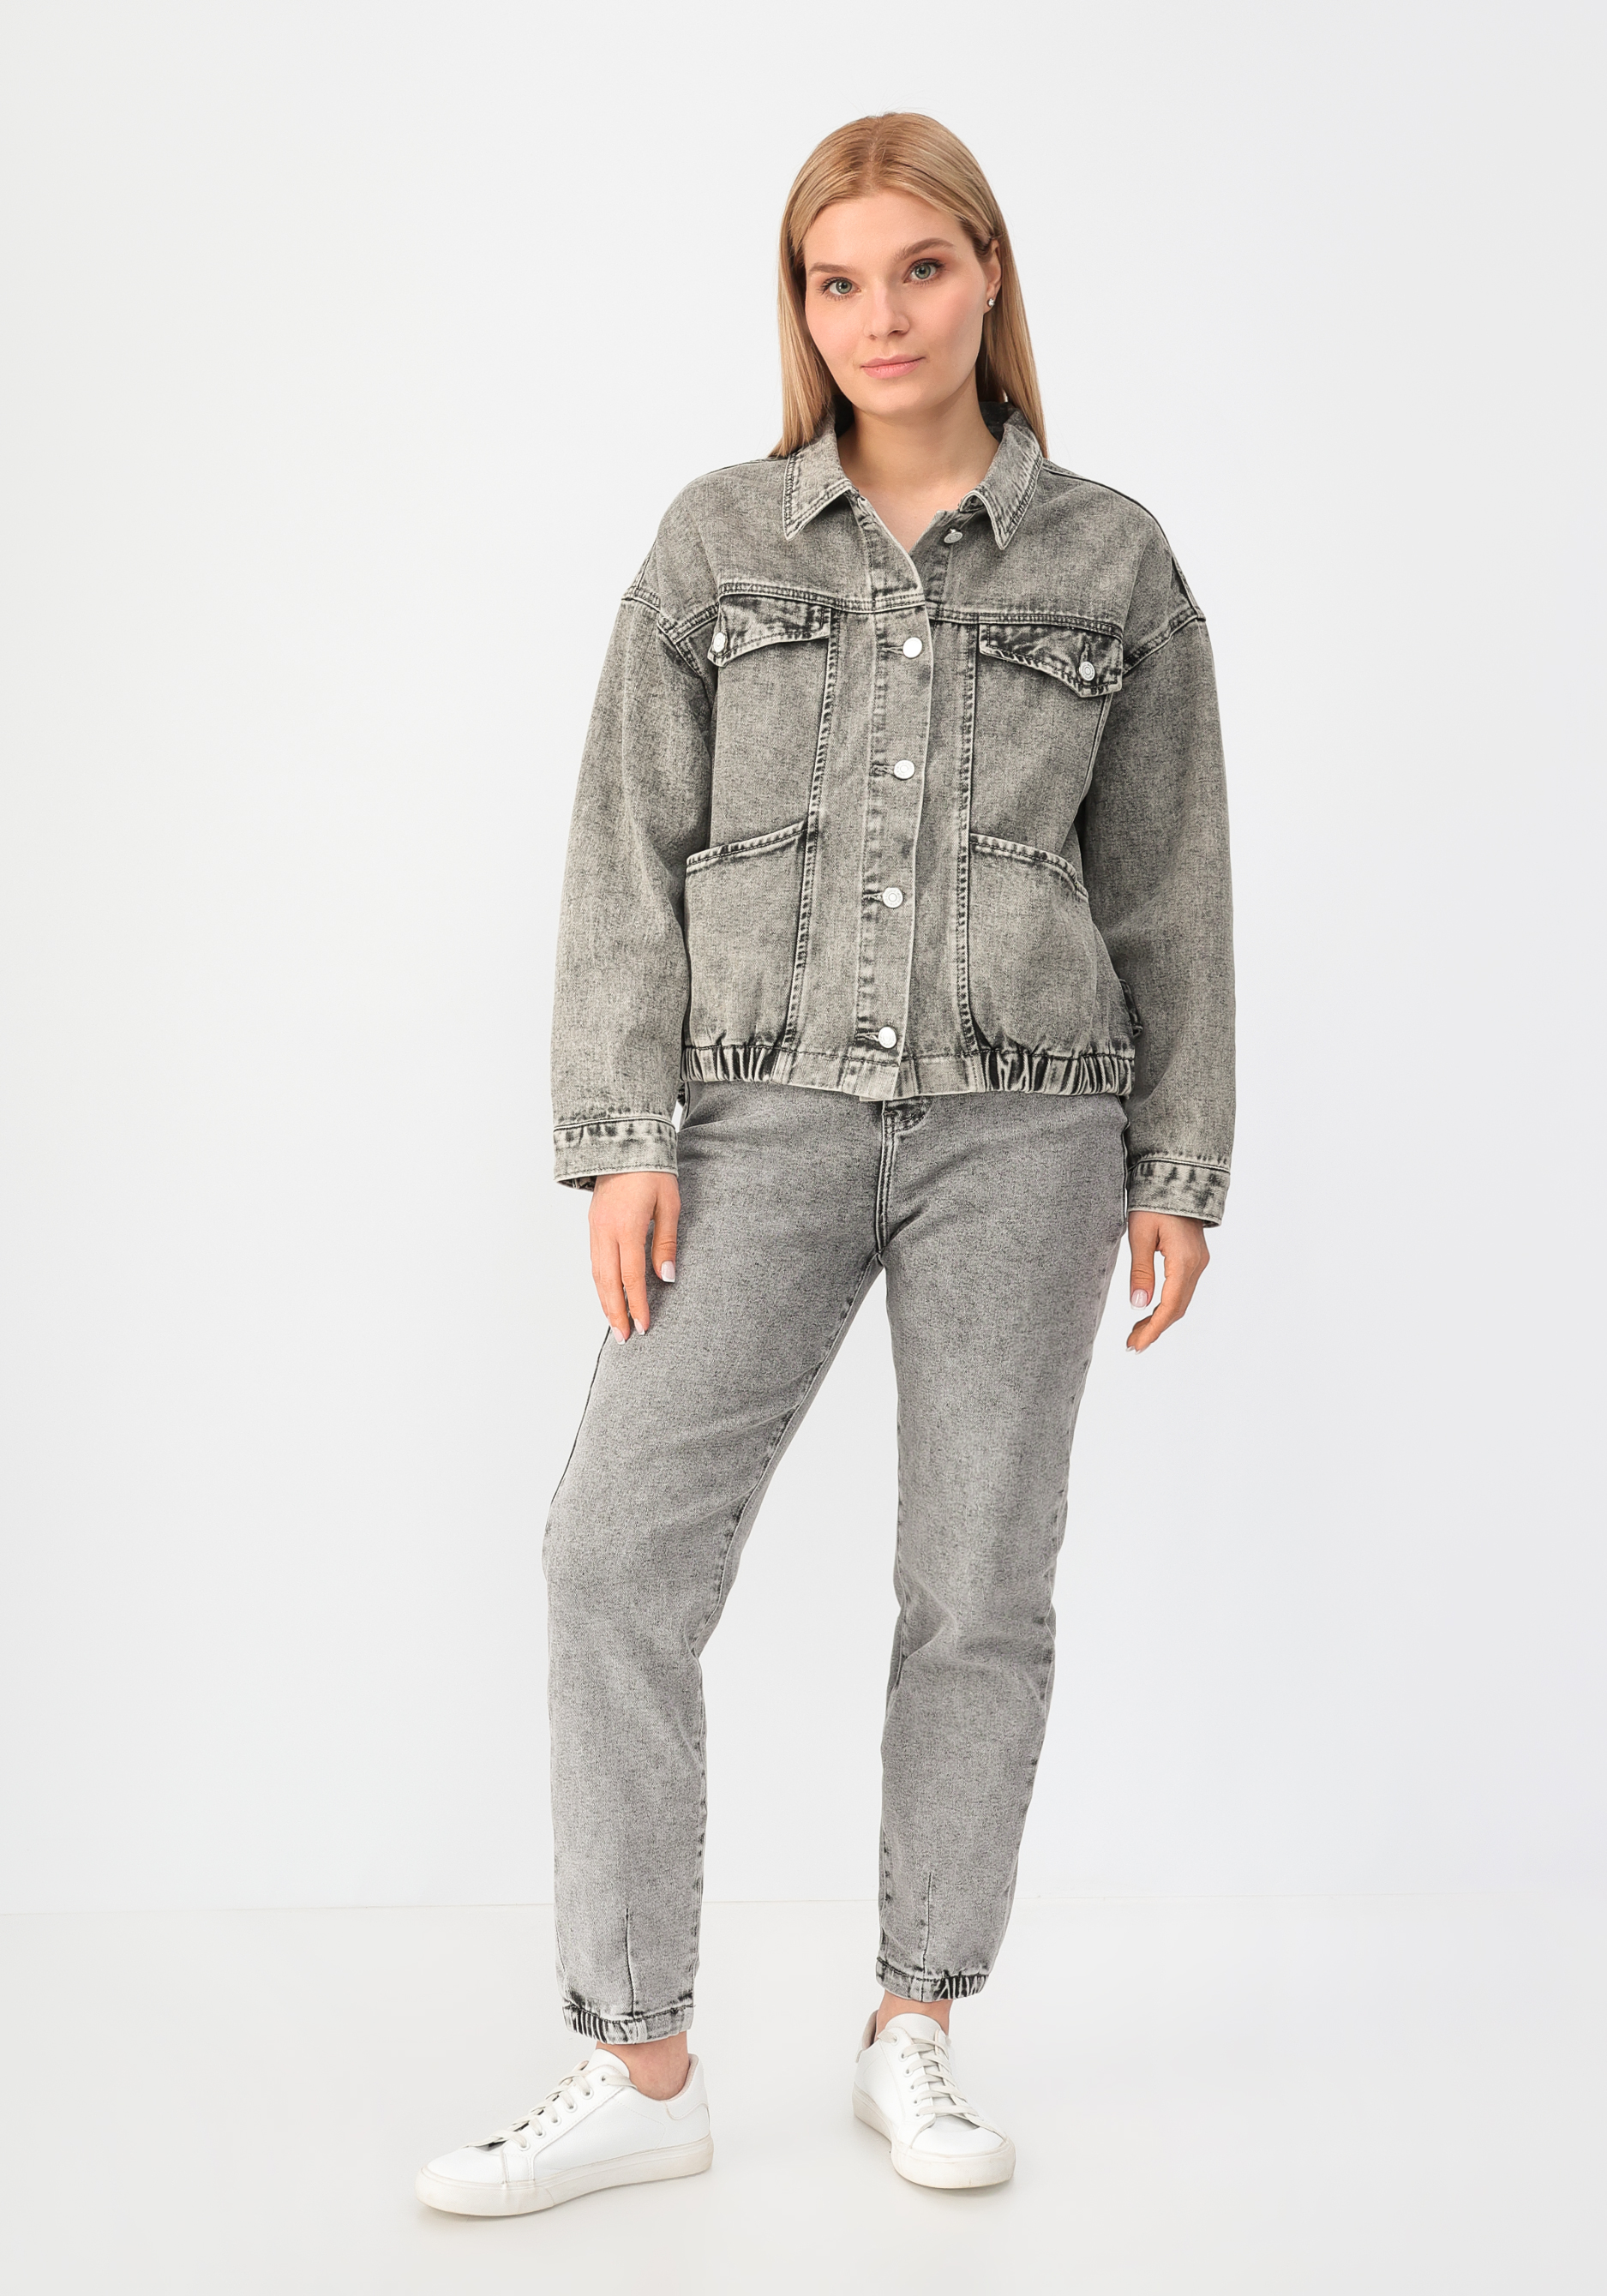 Куртка джинсовая "Милена" No name, размер 48, цвет серый - фото 2